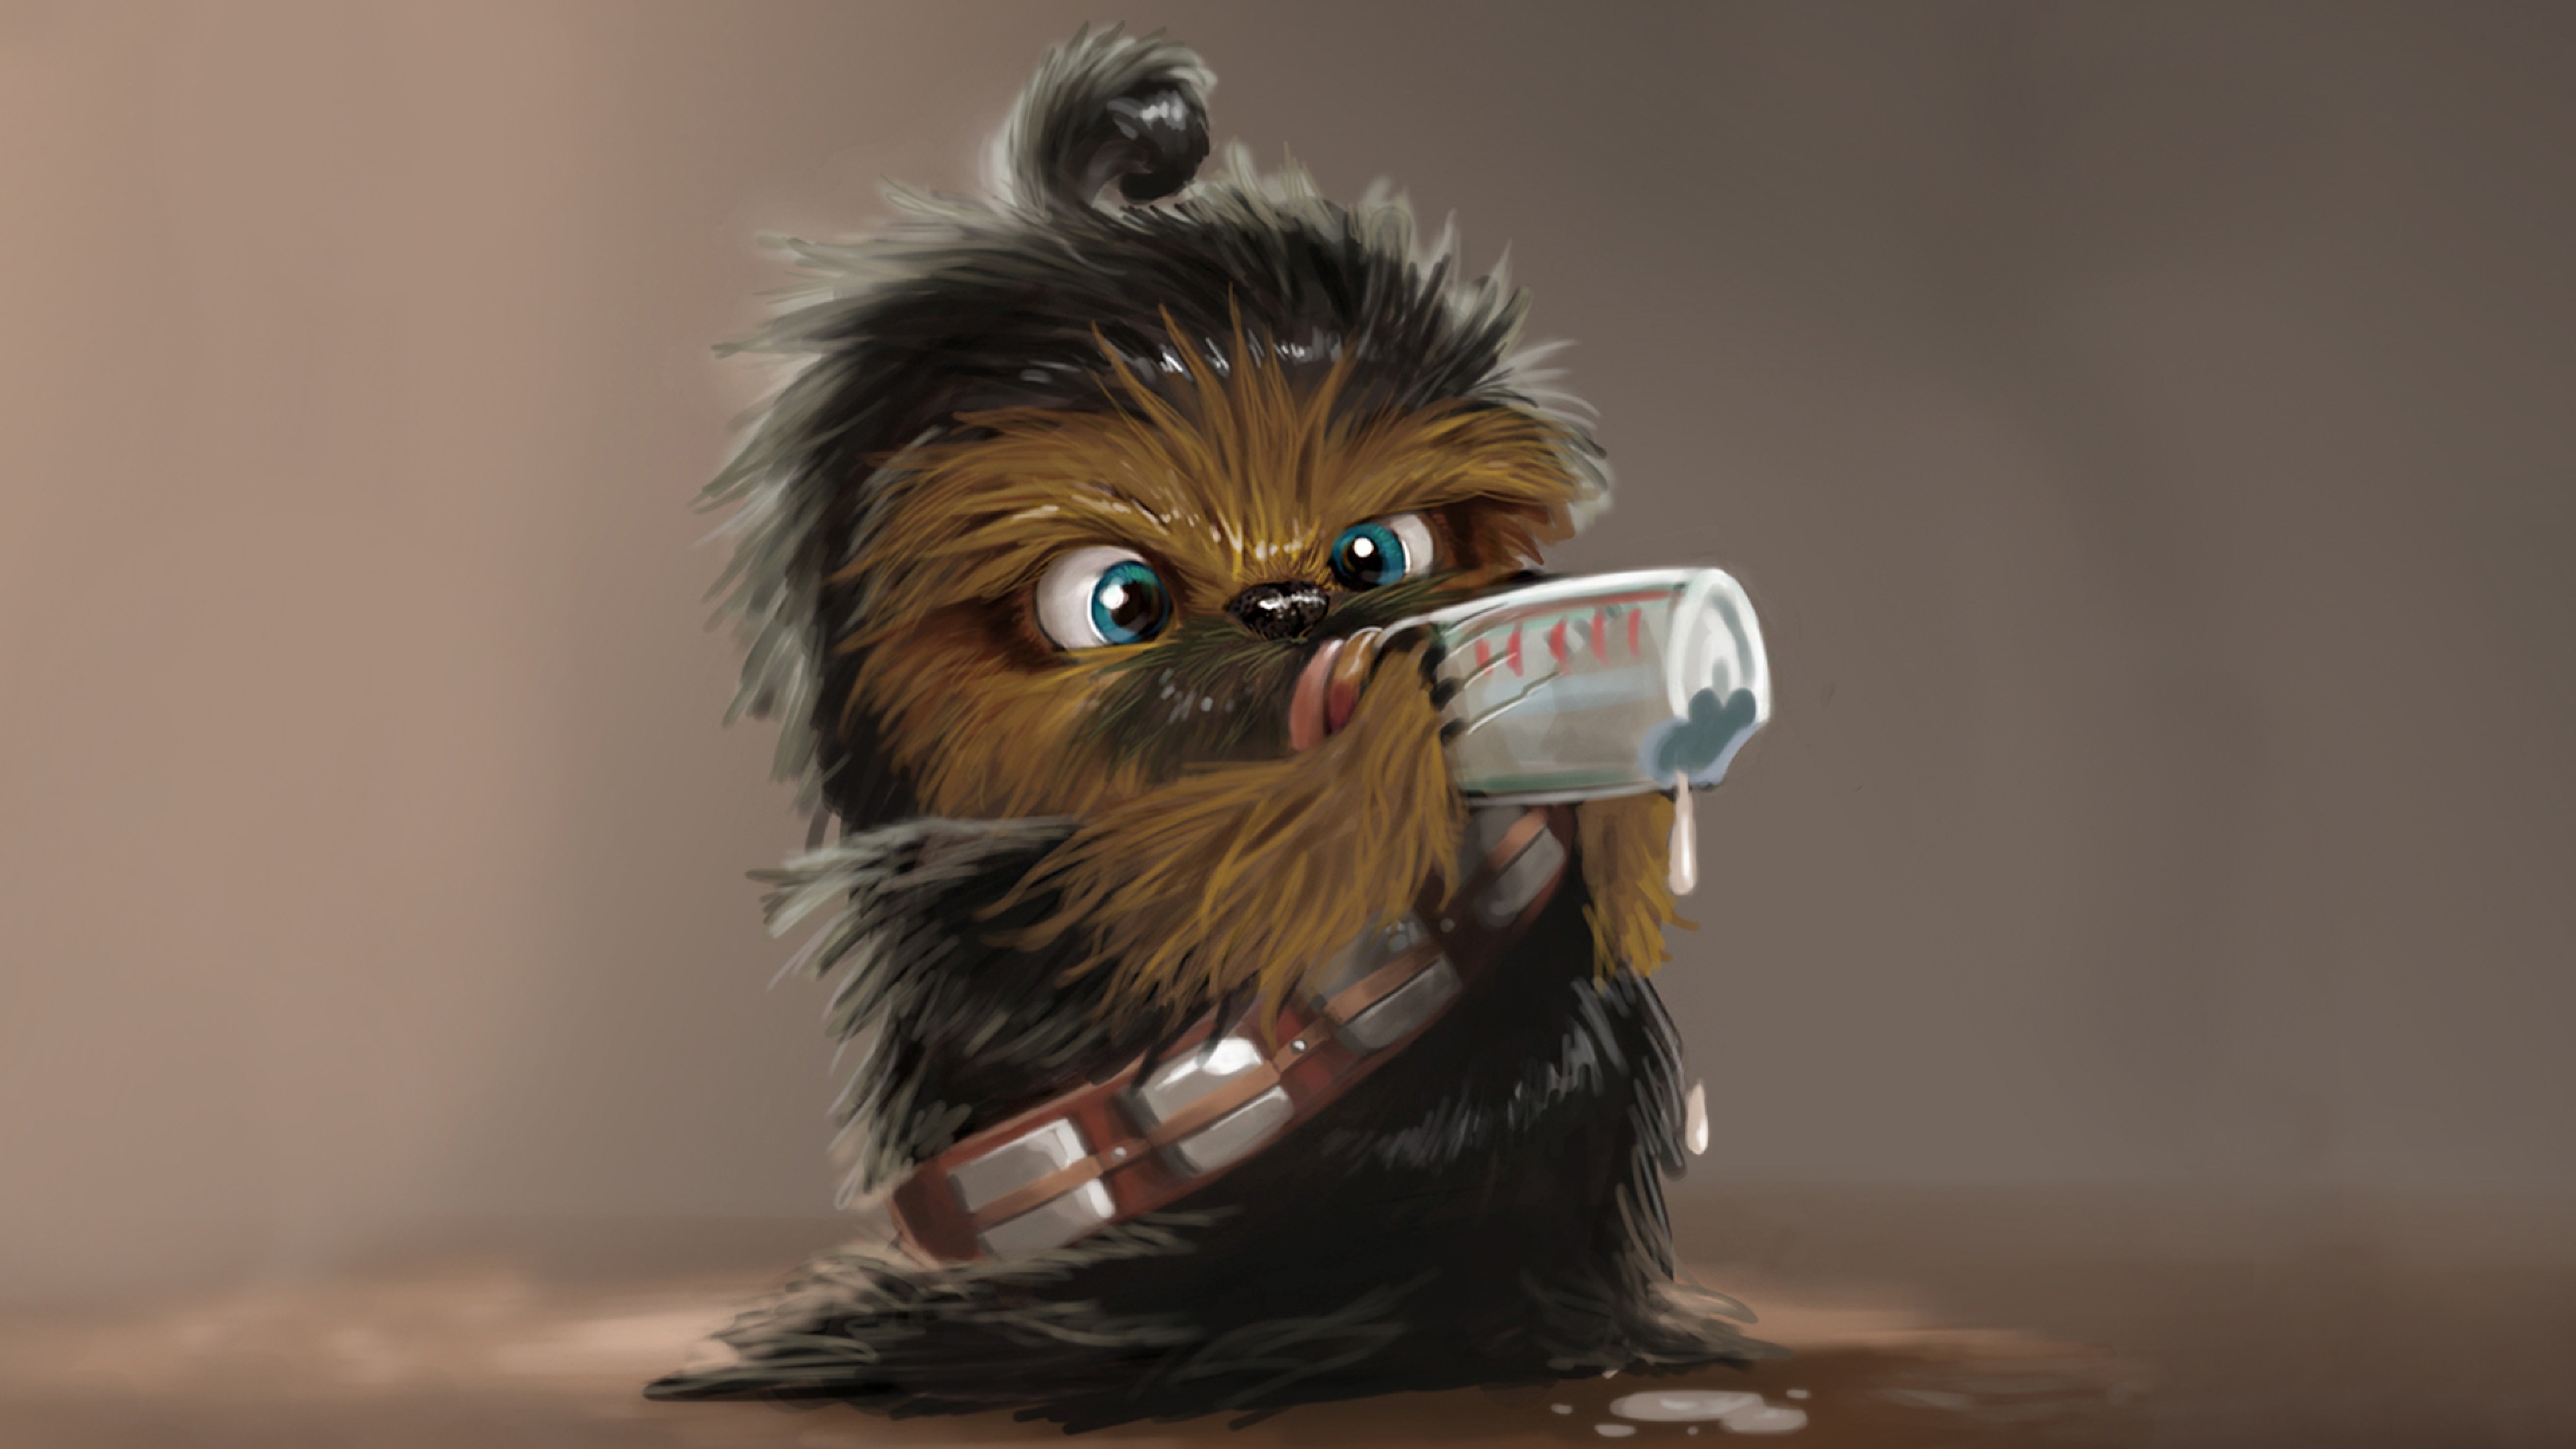 Wallpaper Star Wars Chewbacca Drink Baby 4k Ultra HD